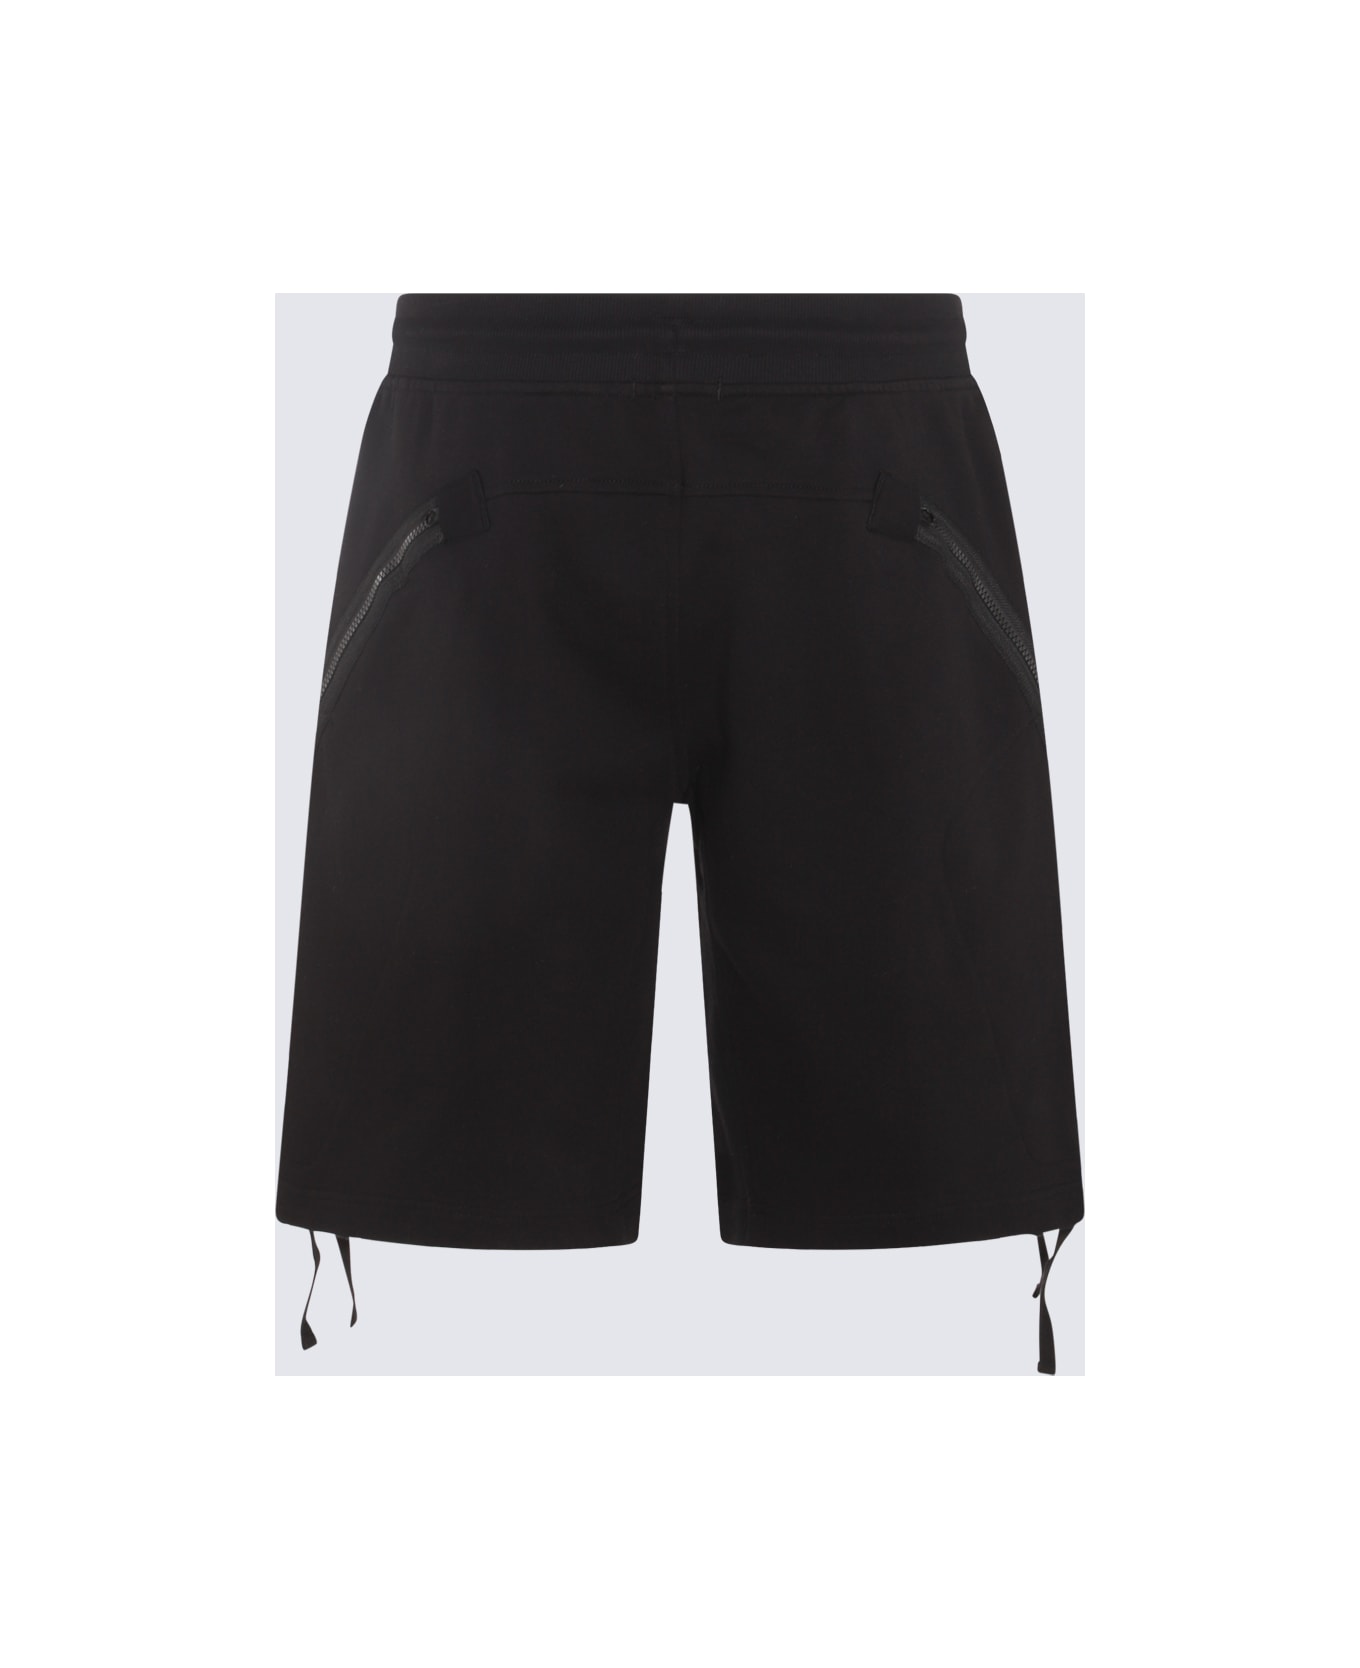 C.P. Company Black Cotton Shorts - Black ショートパンツ